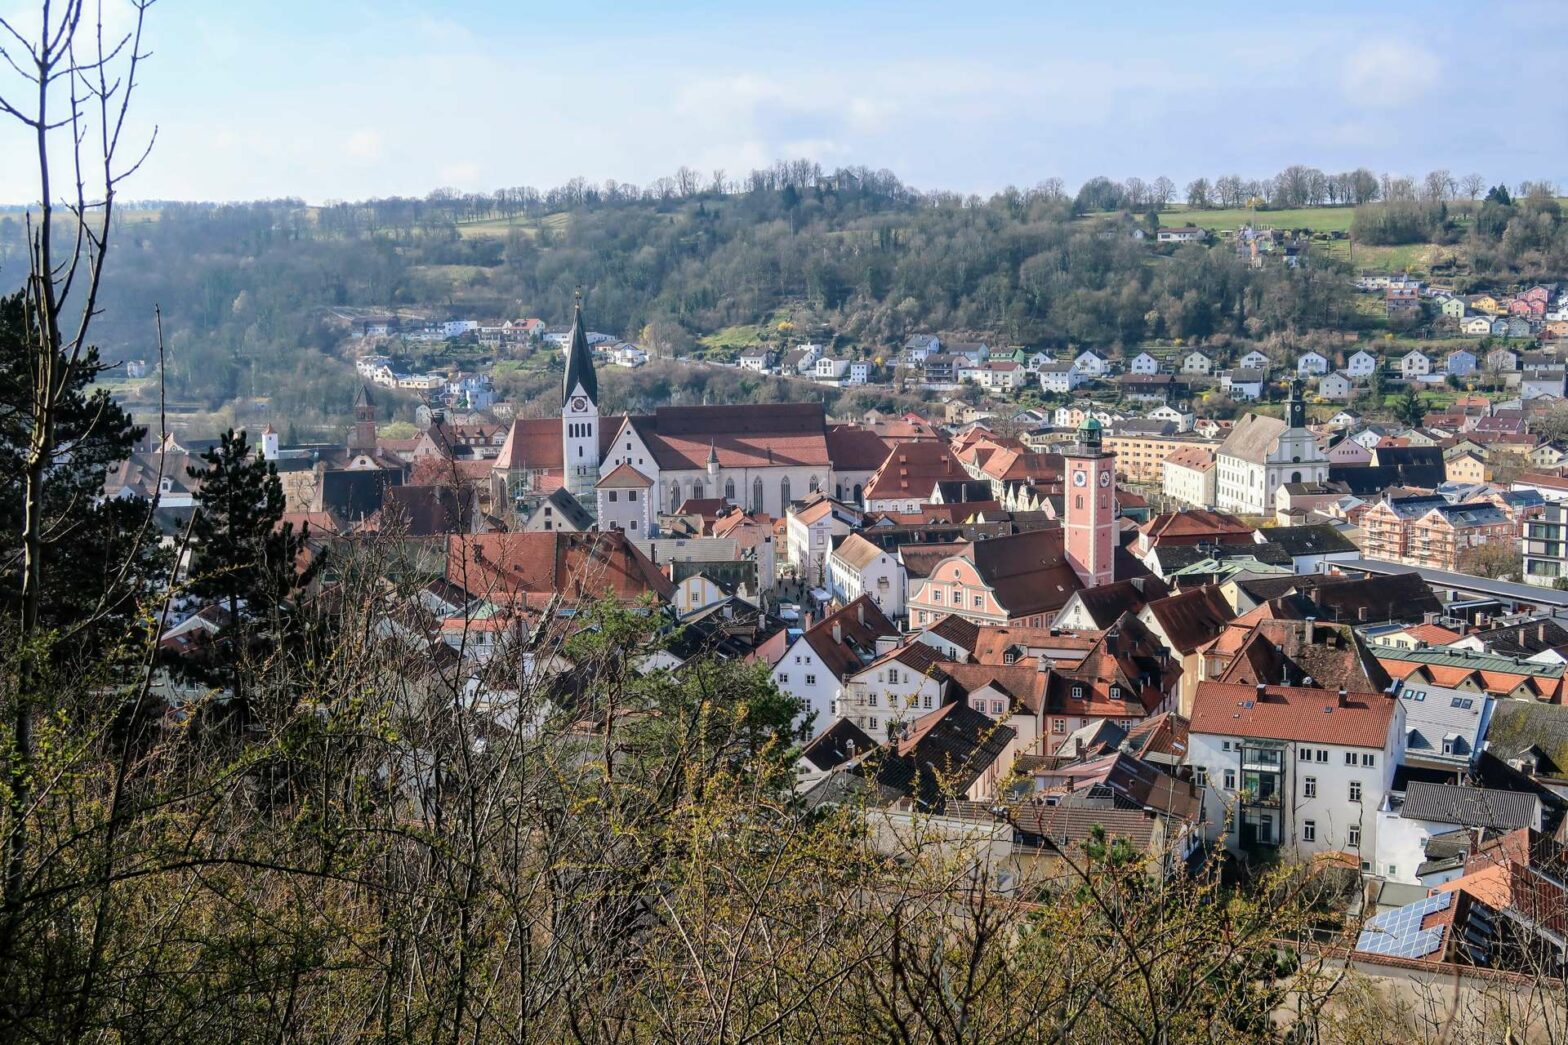 Views over Eichstatt town in the Altmuhltal